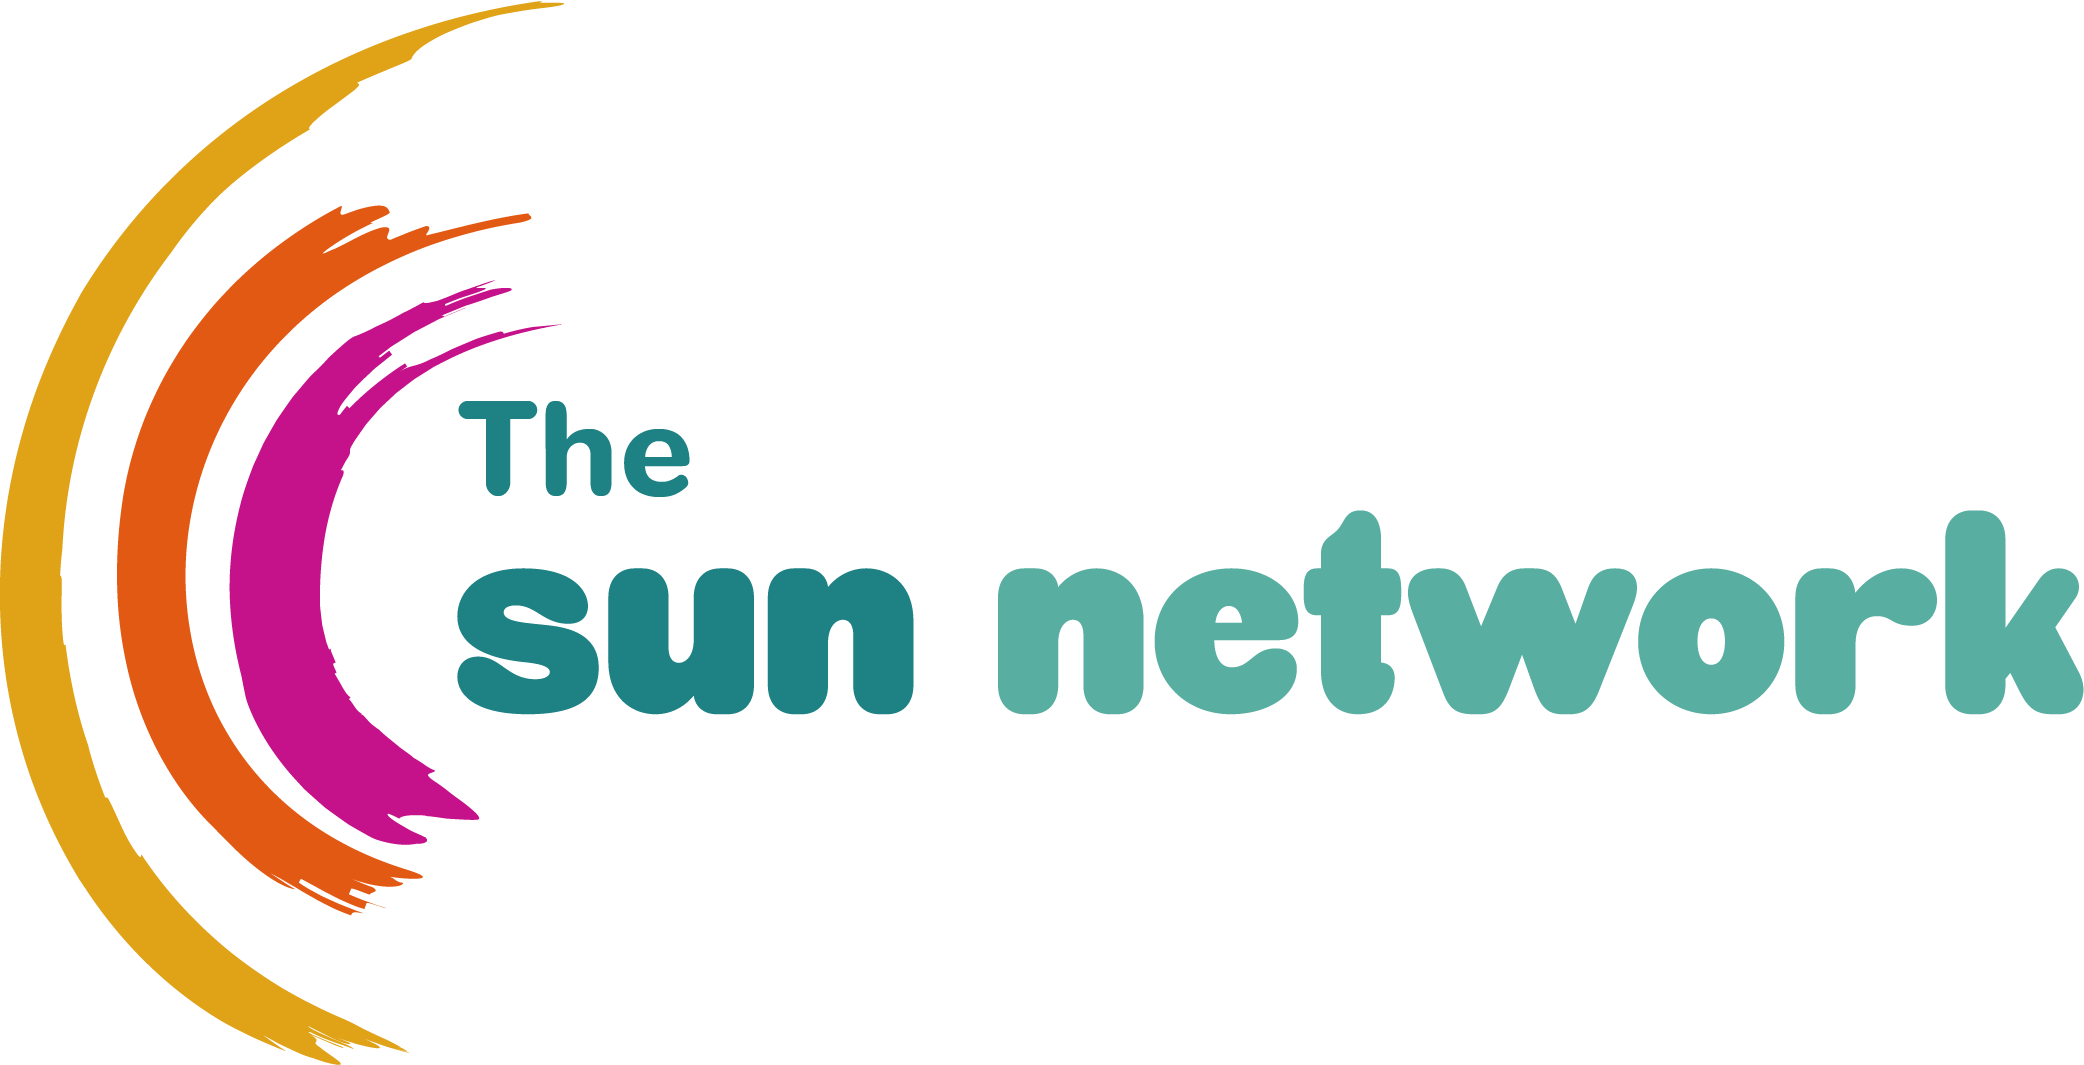 The SUN Network